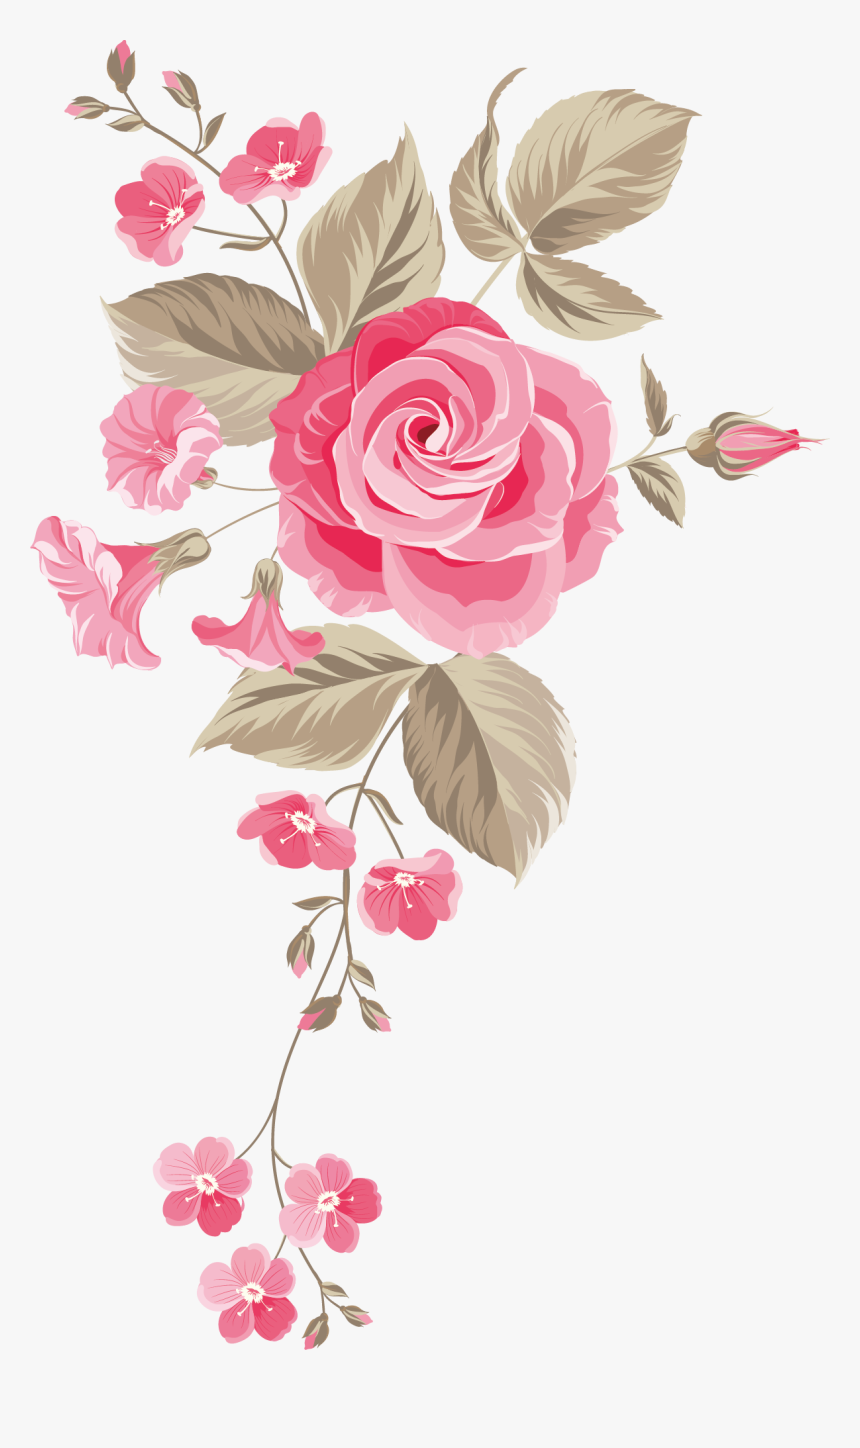 Rose Flower Png Image Free Downl